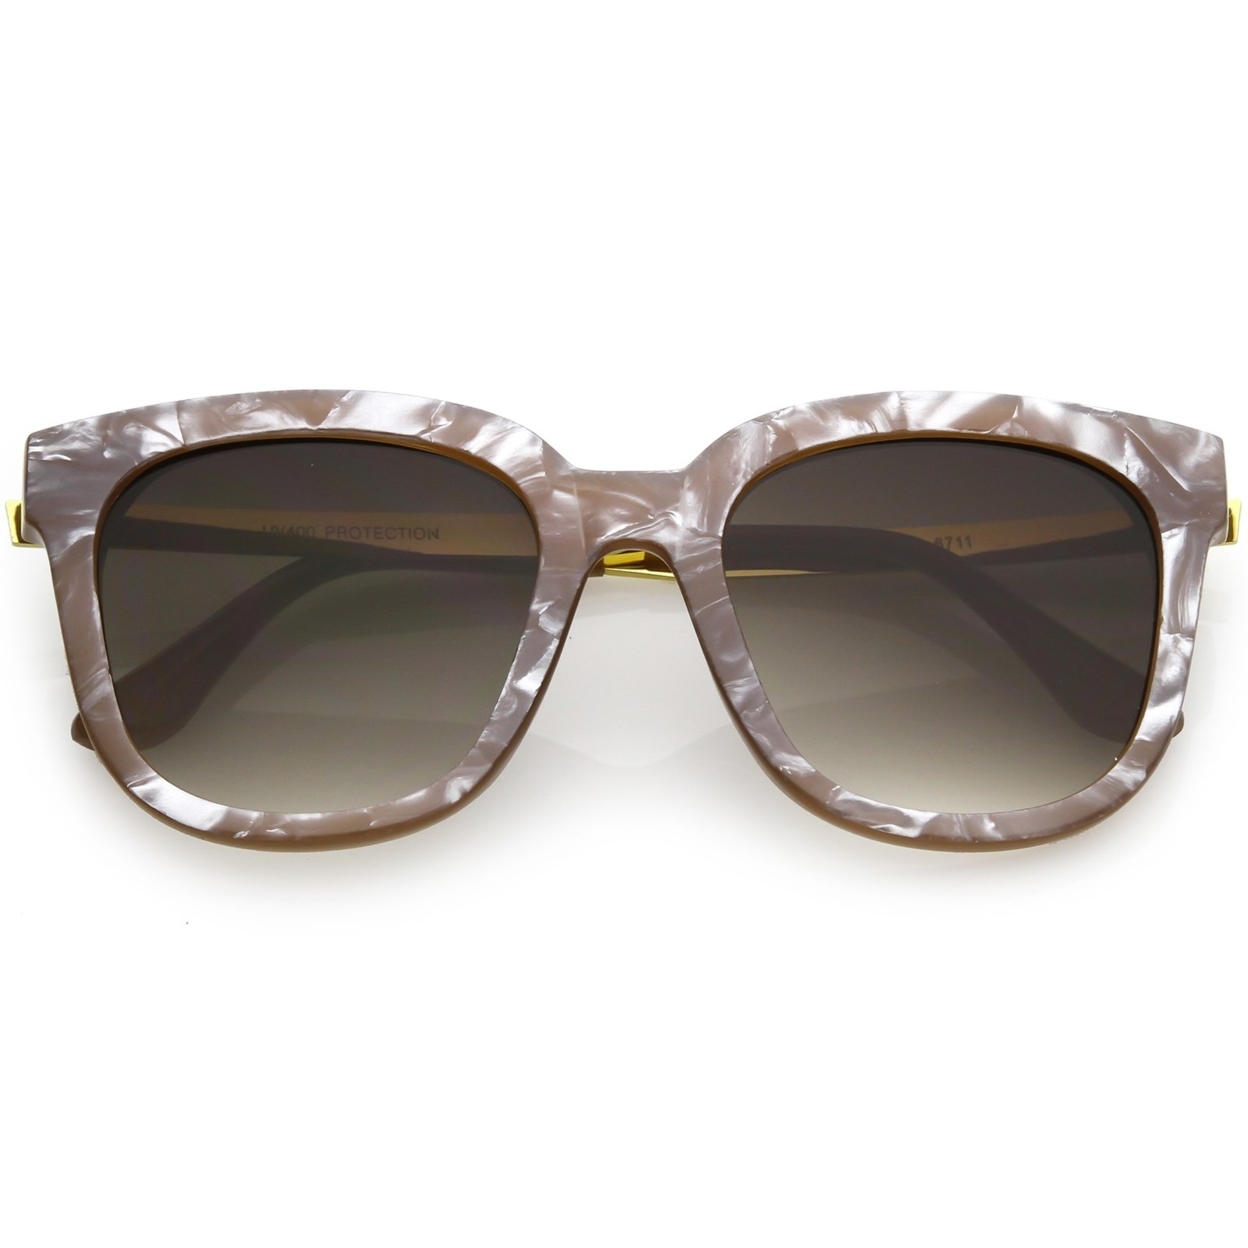 Modern Marble Print Square Sunglasses Horn Rimmed Round Gradient Lens 53mm - Dark Grey / Lavender